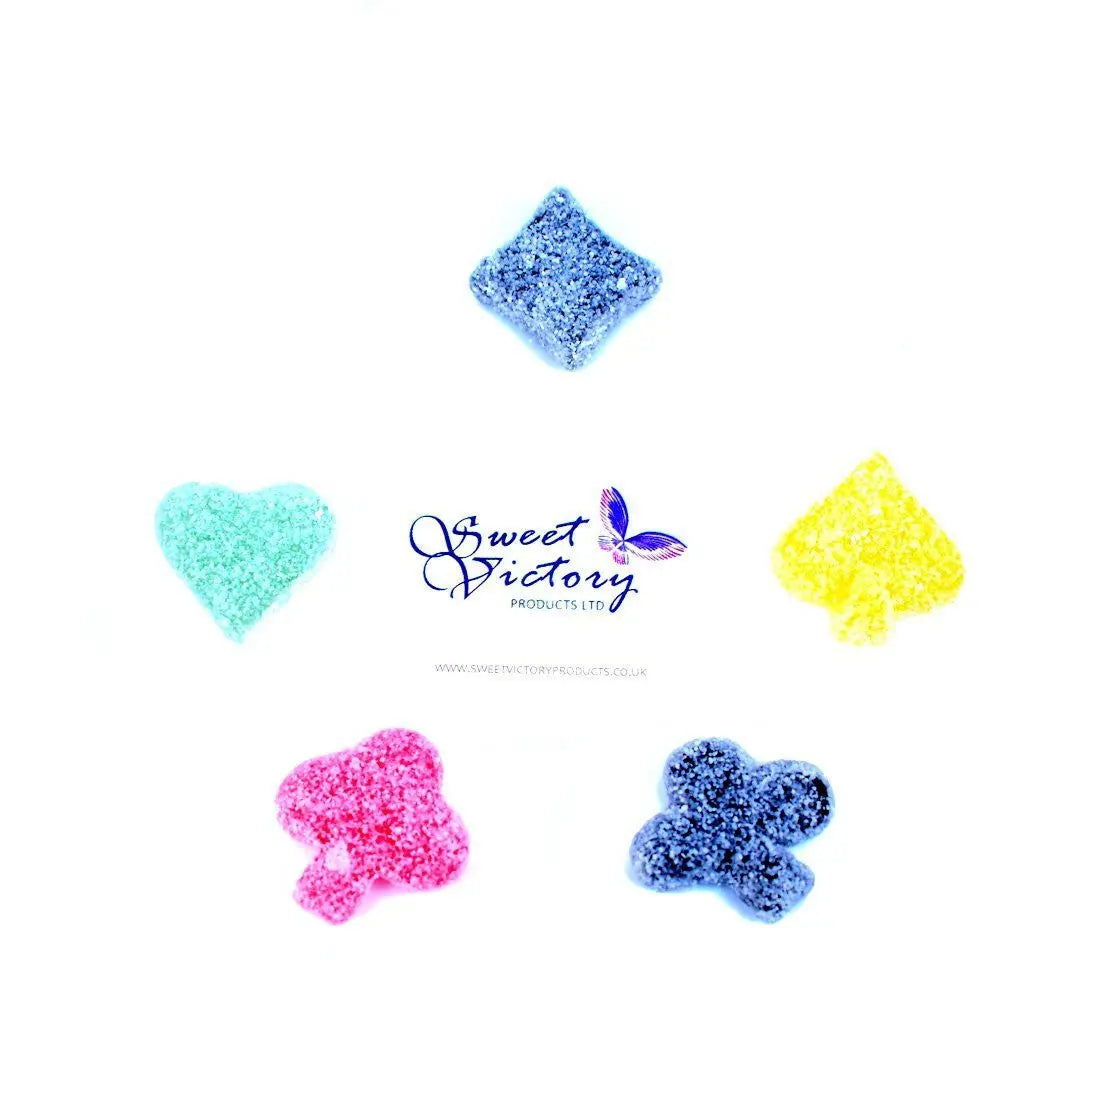 de Bron Sugar Free Gummy Poker Fruit Sweets 90g - Sweet Victory Products Ltd